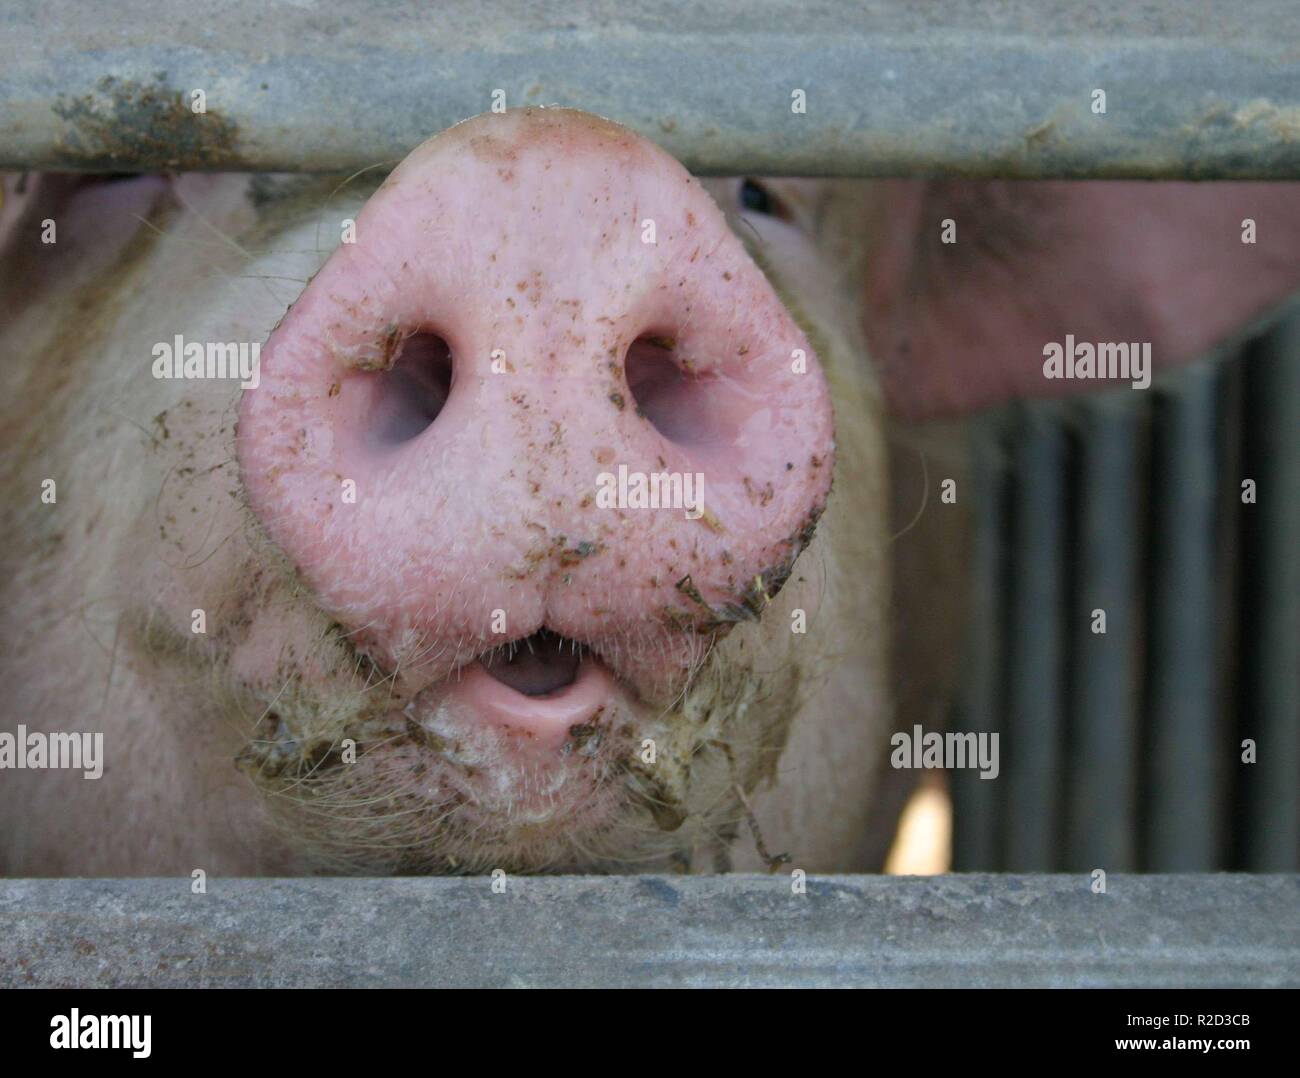 pig snout Stock Photo